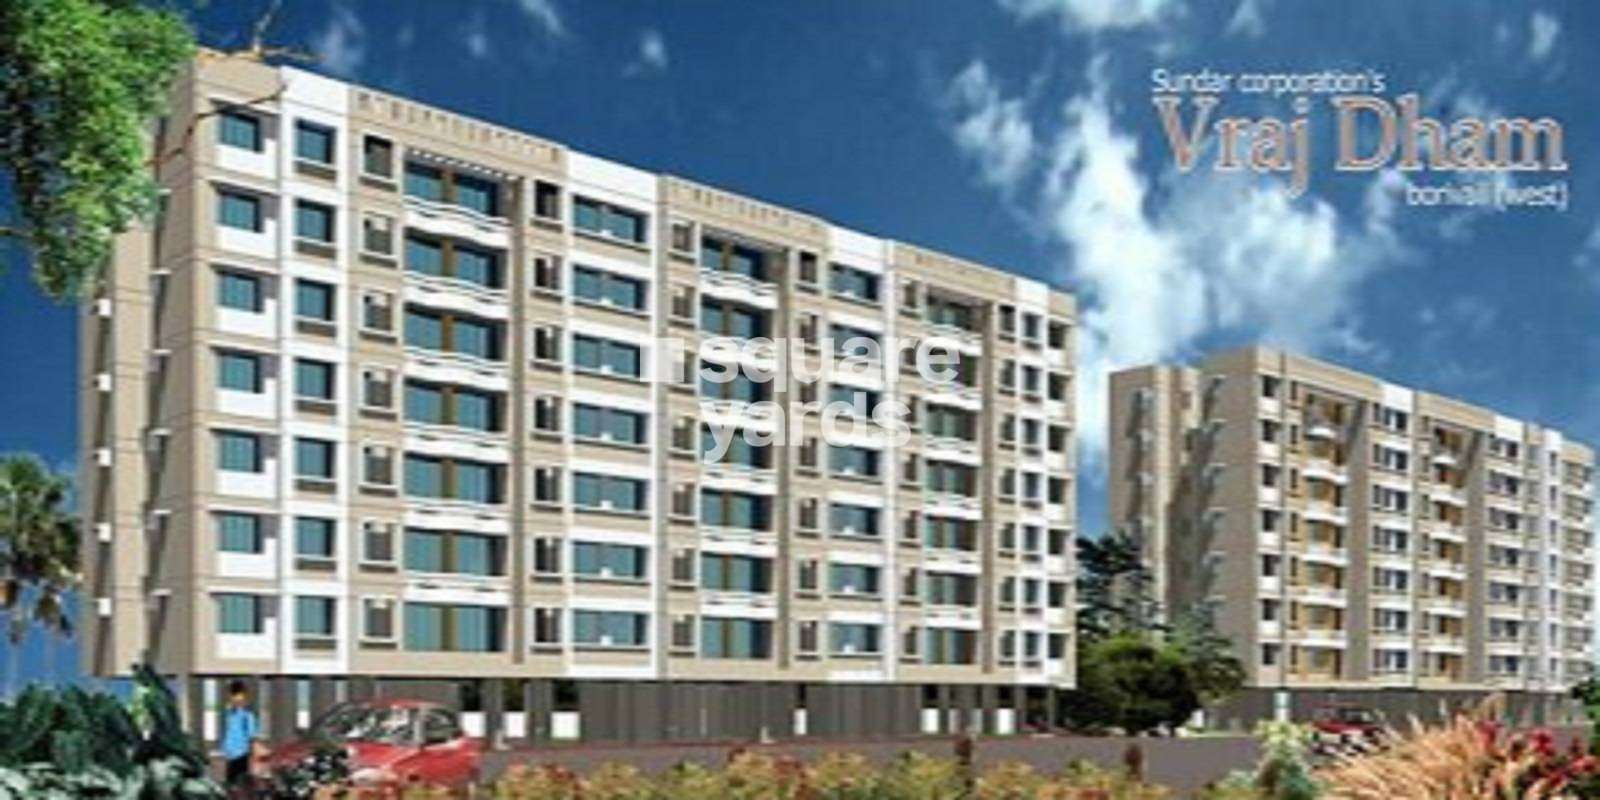 Vraj Dham Apartment Cover Image